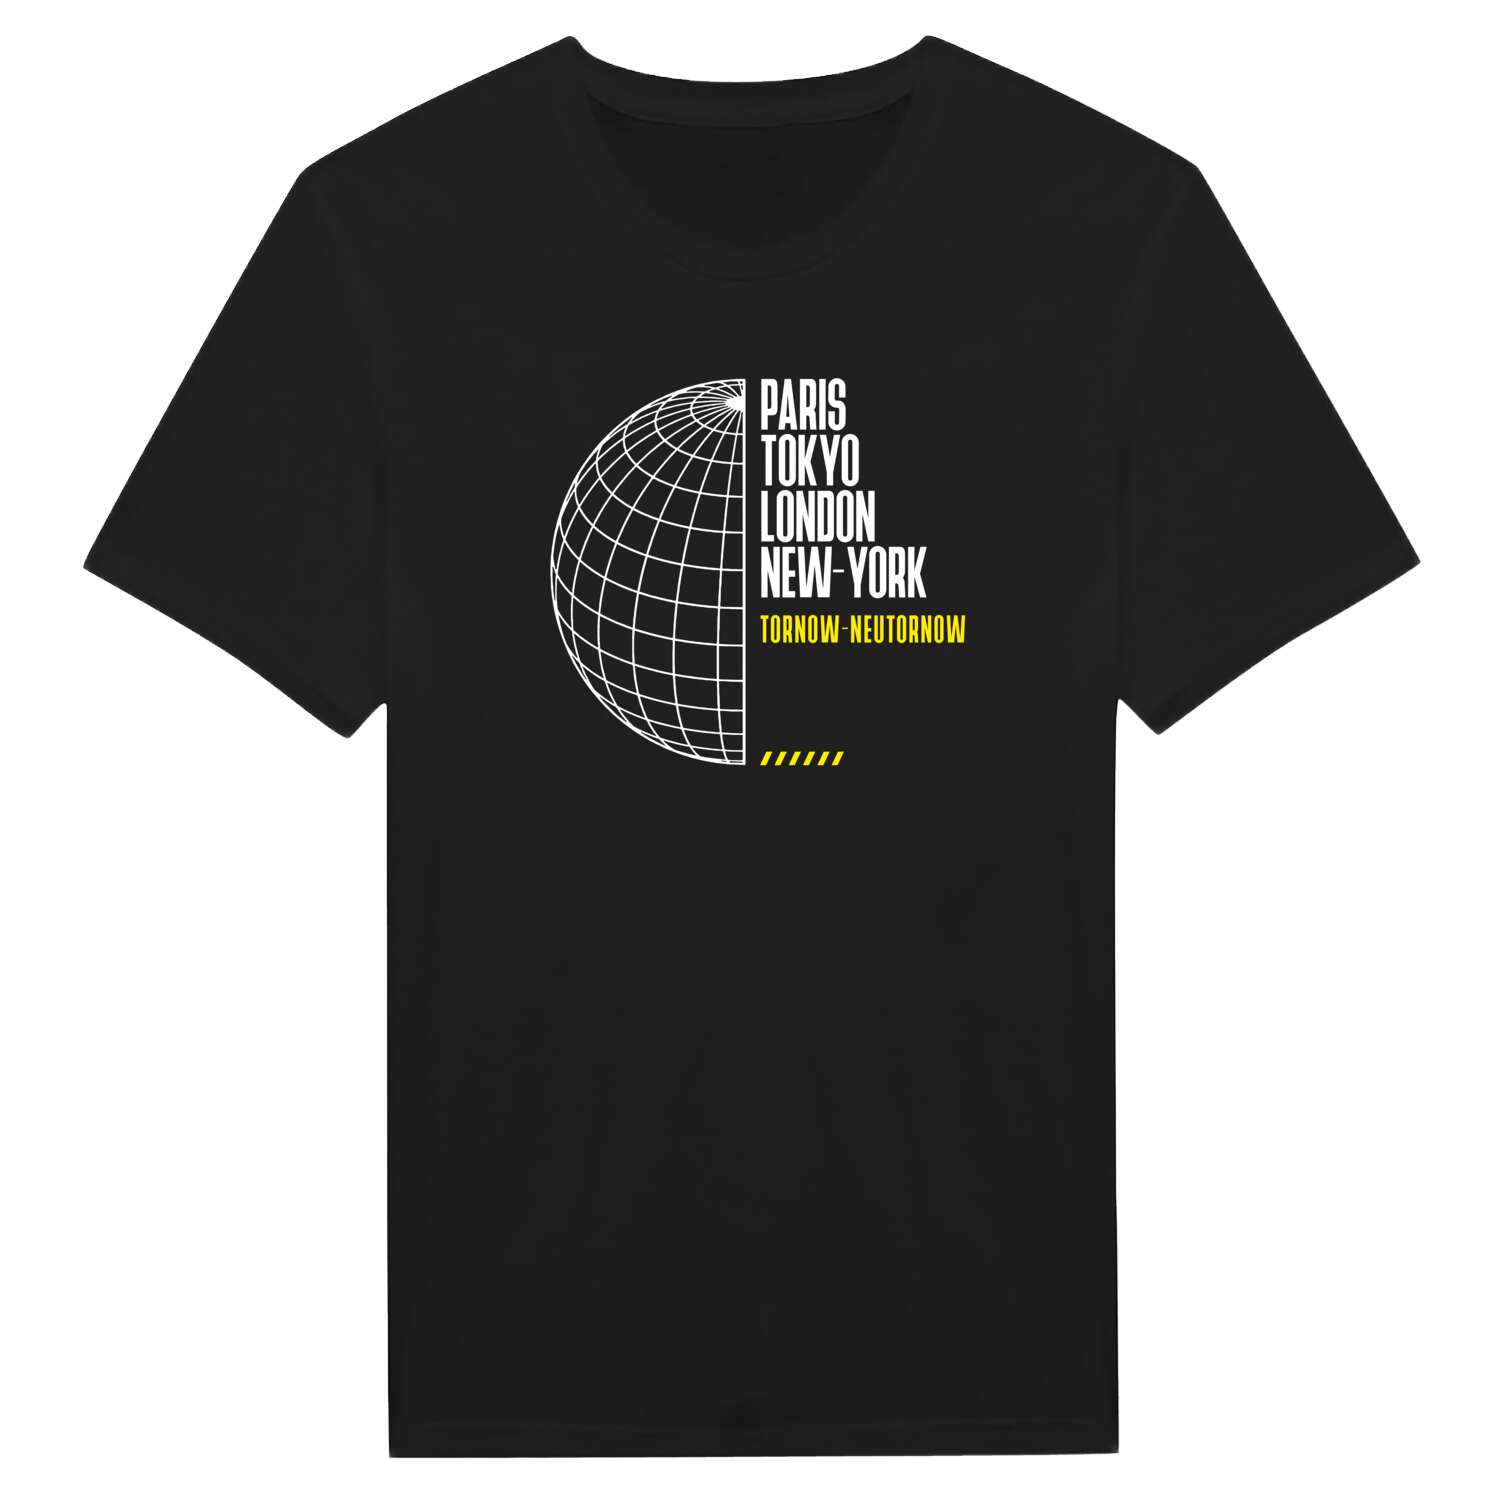 Tornow-Neutornow T-Shirt »Paris Tokyo London«